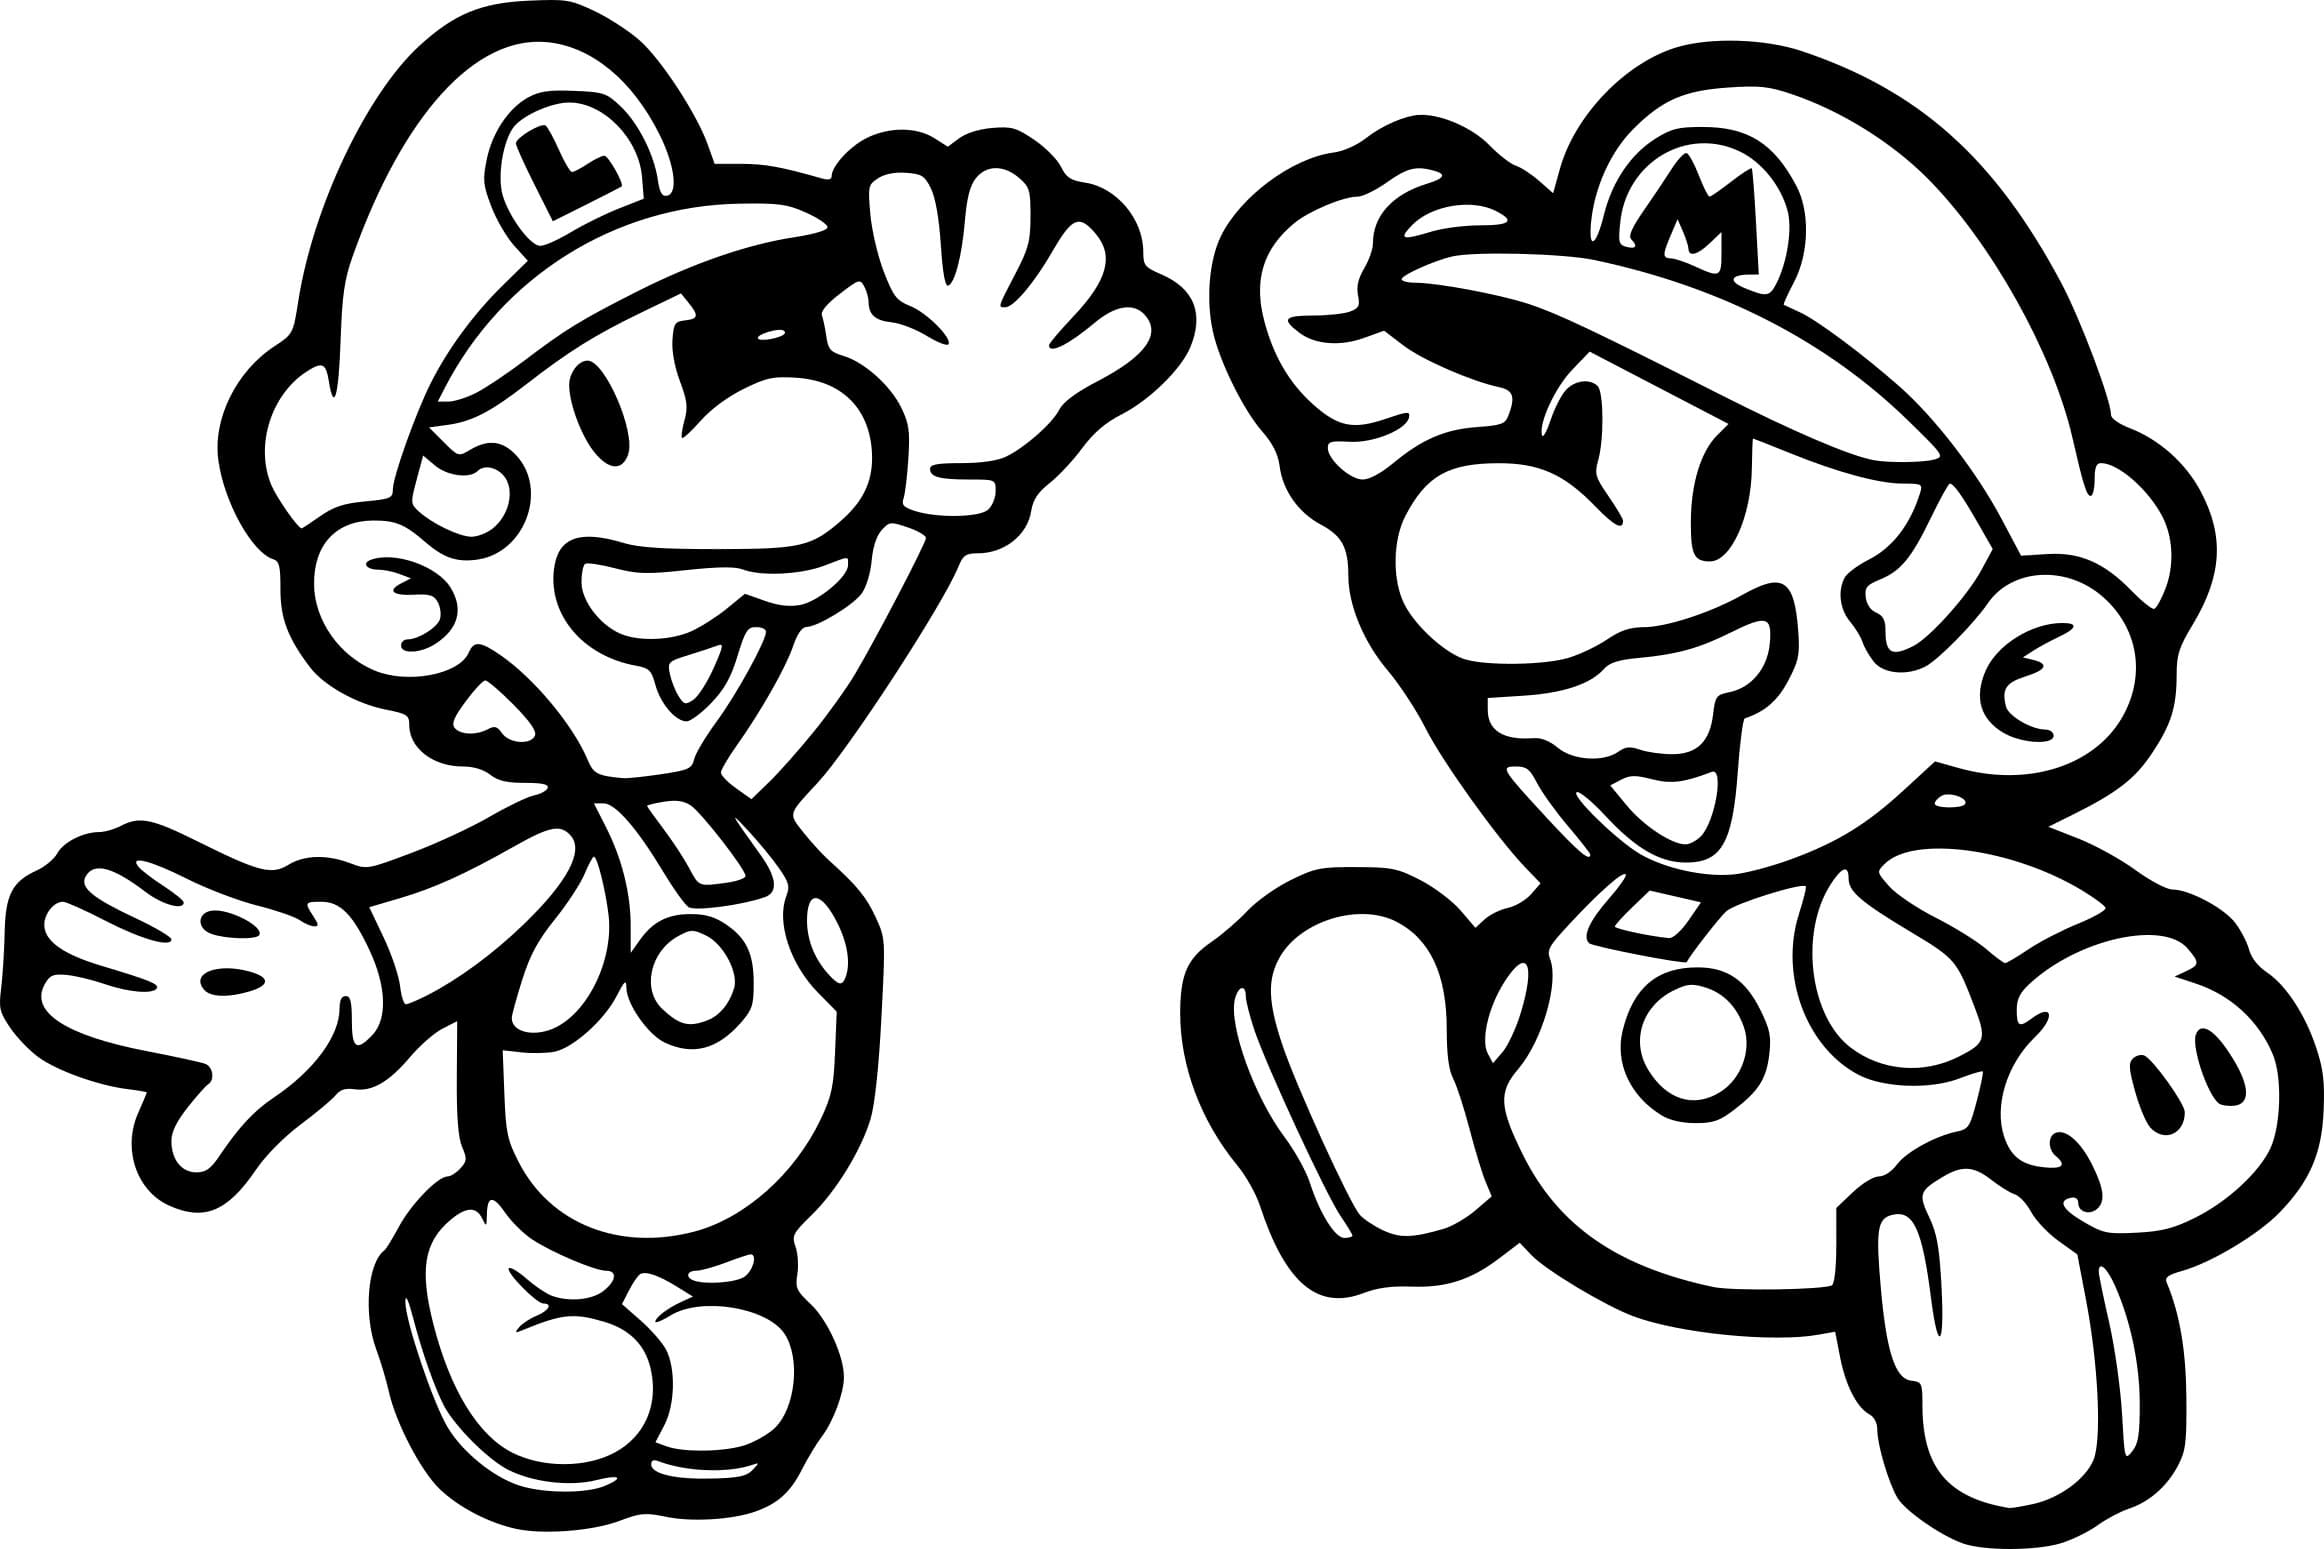 Coloriage Mario à imprimer